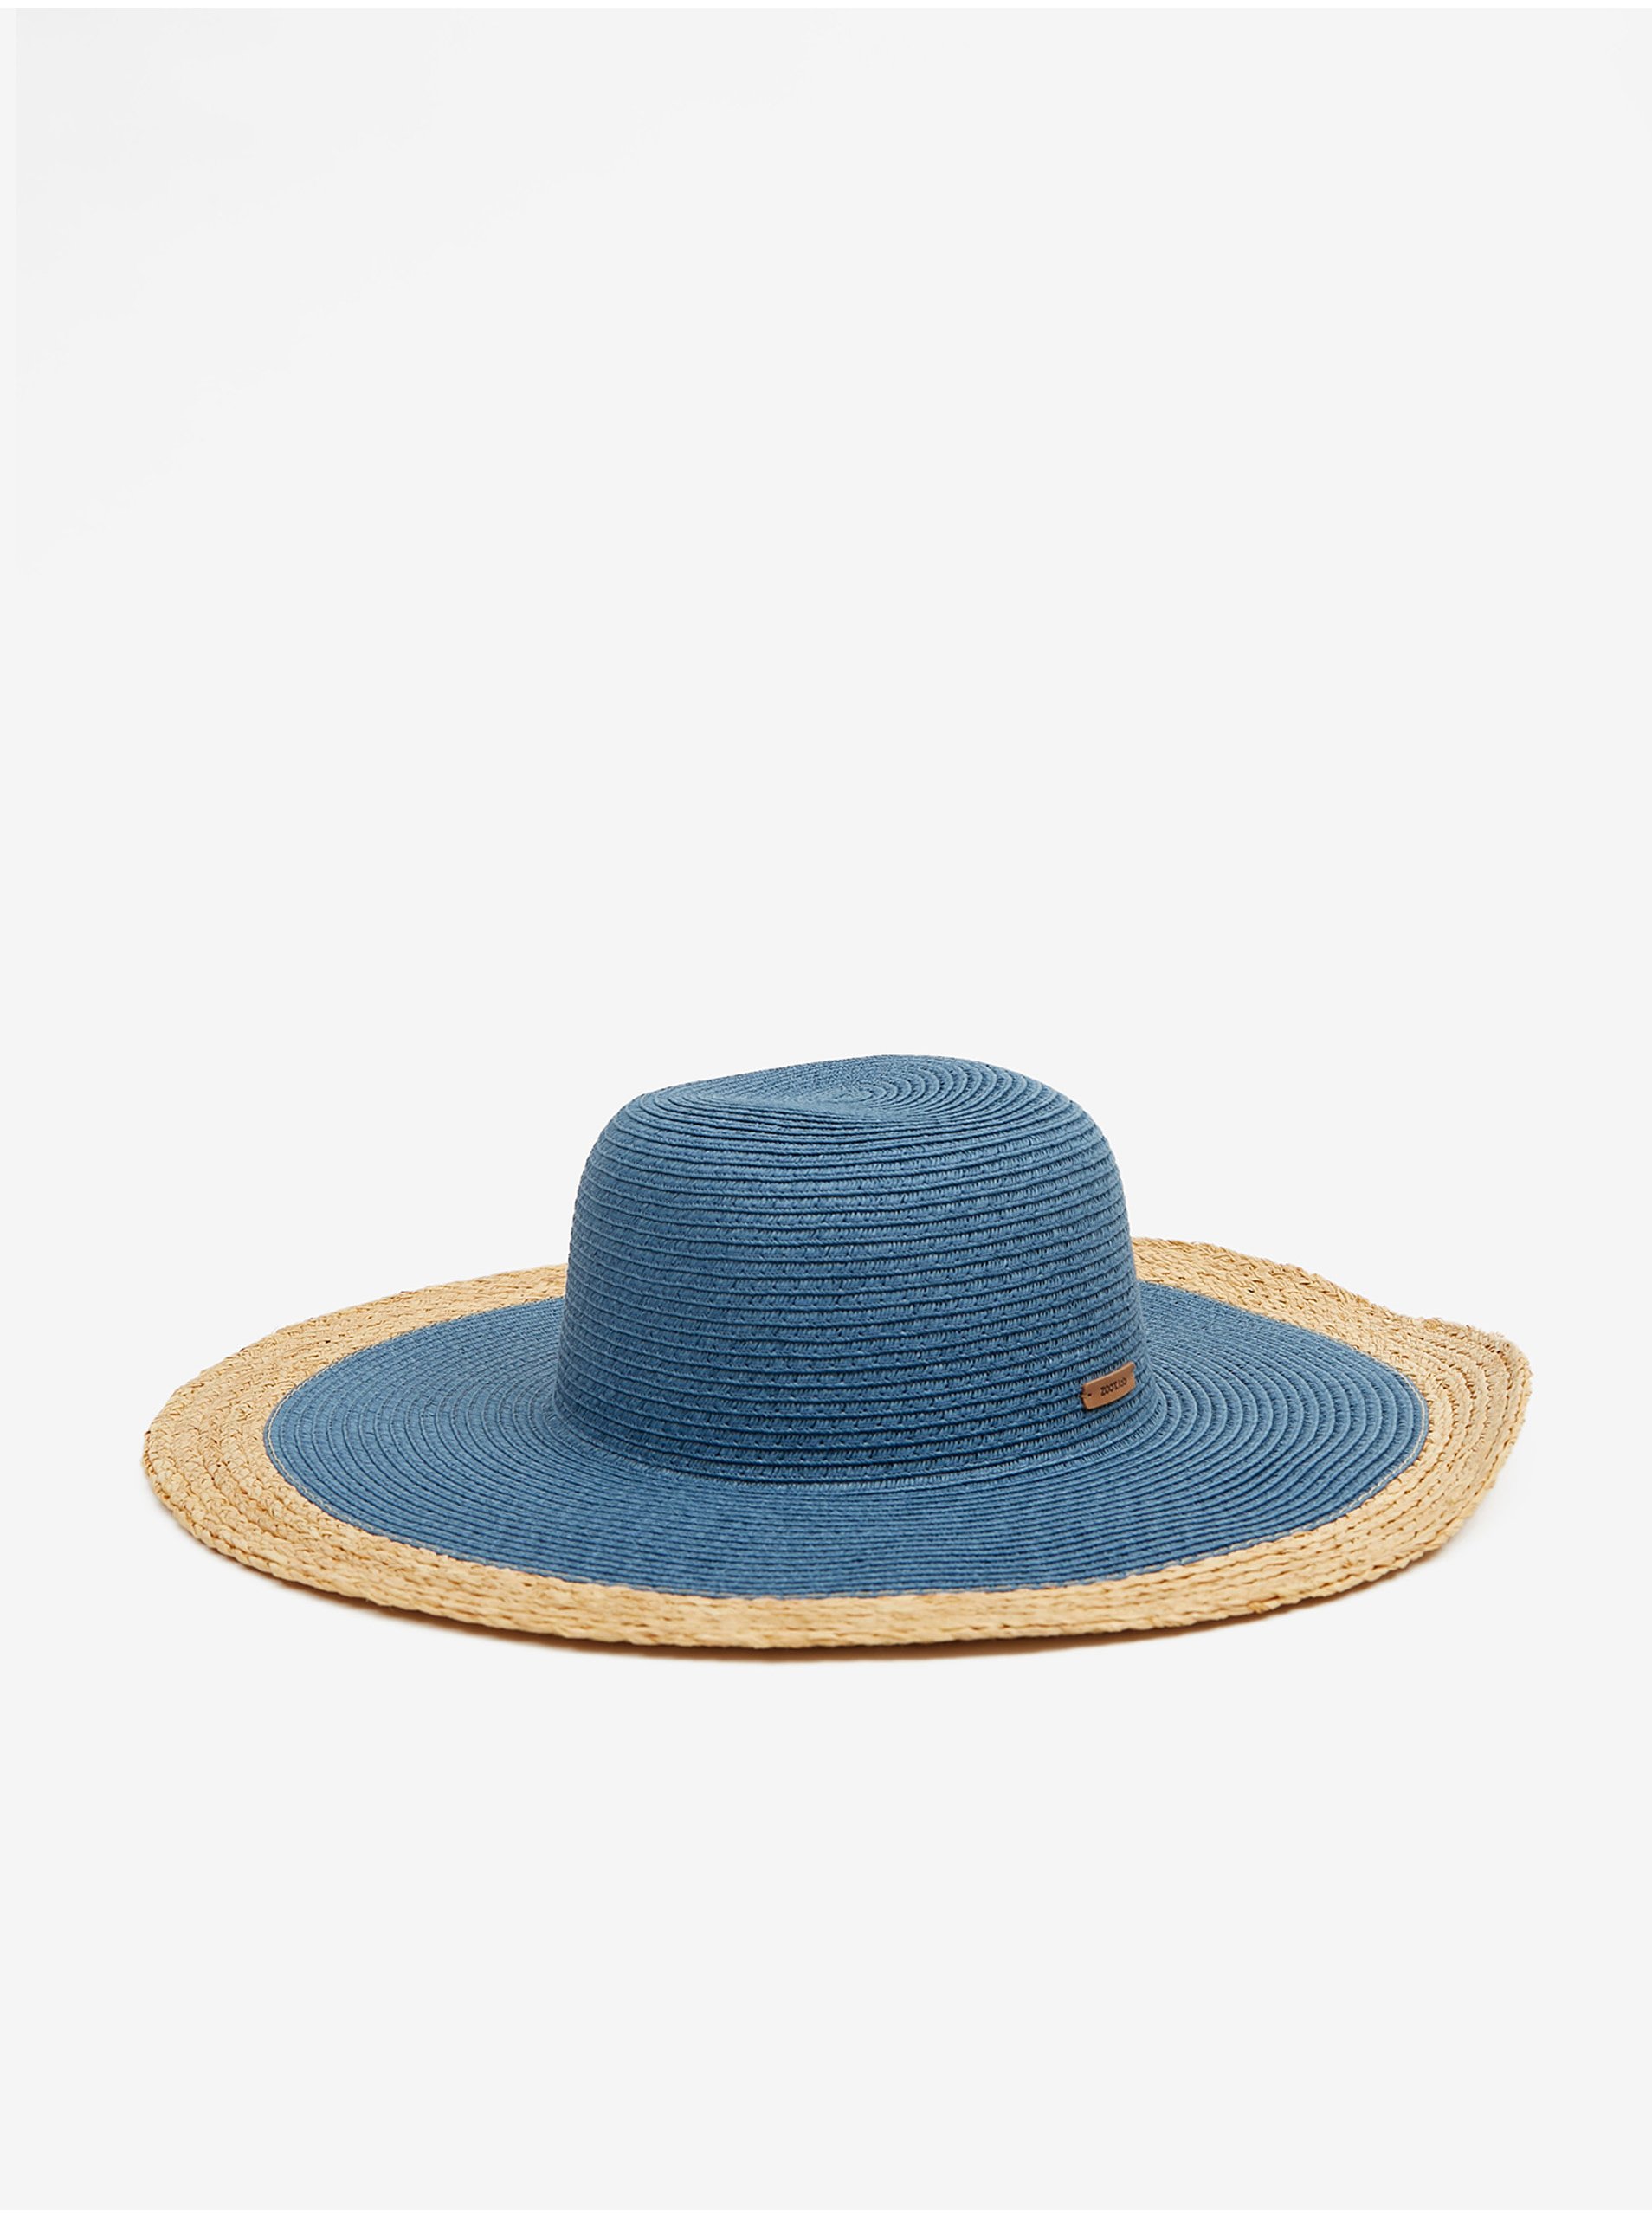 Lacno Hnedo-modrý dámsky slamený klobúk ZOOT.lab Lysbet